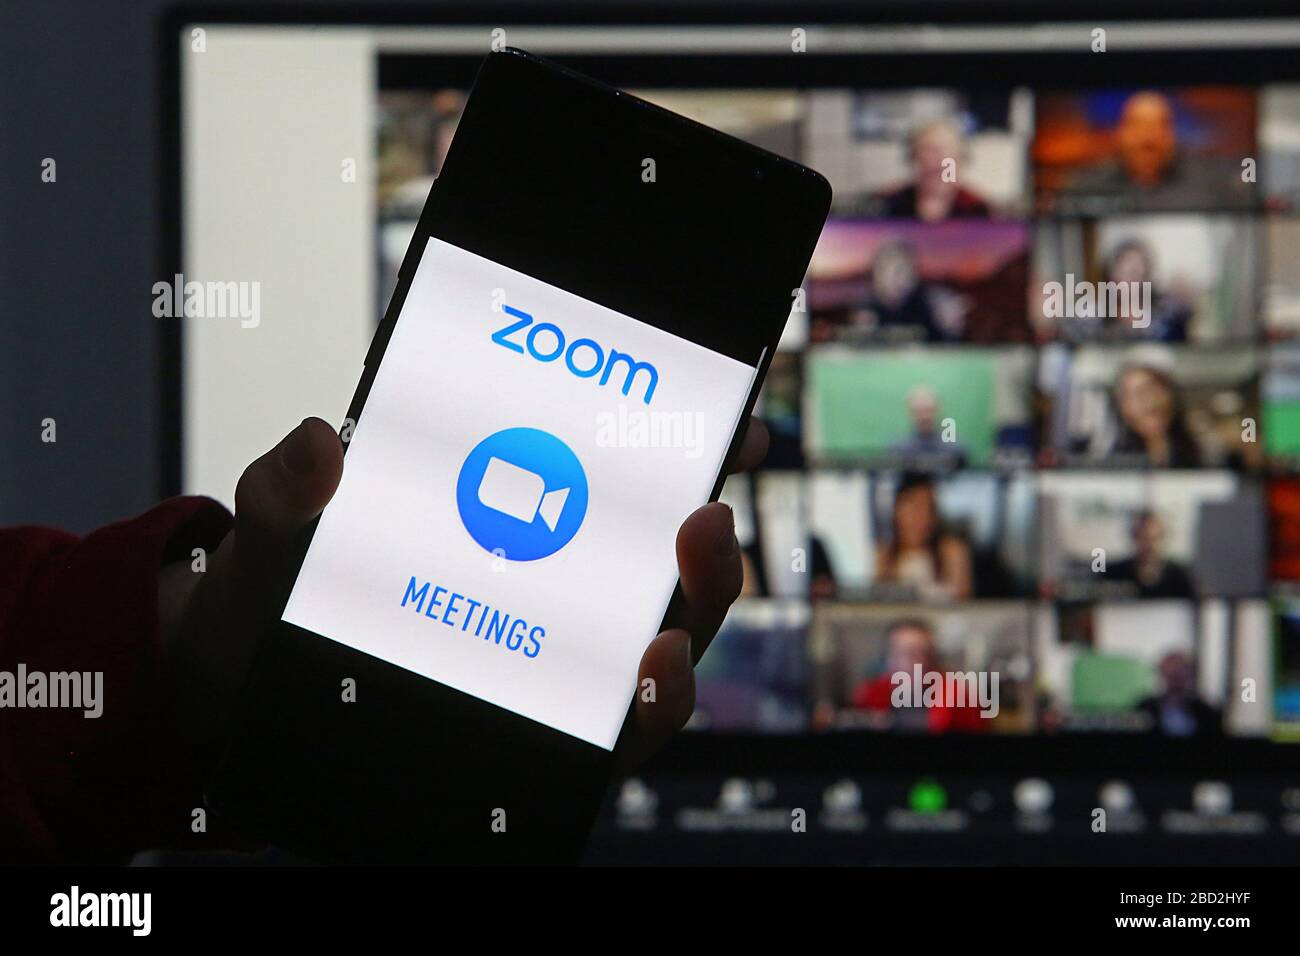 April 2020. Istanbul/Türkei. Smartphone mit der App "Zoom Cloud Meetings", Stockfoto